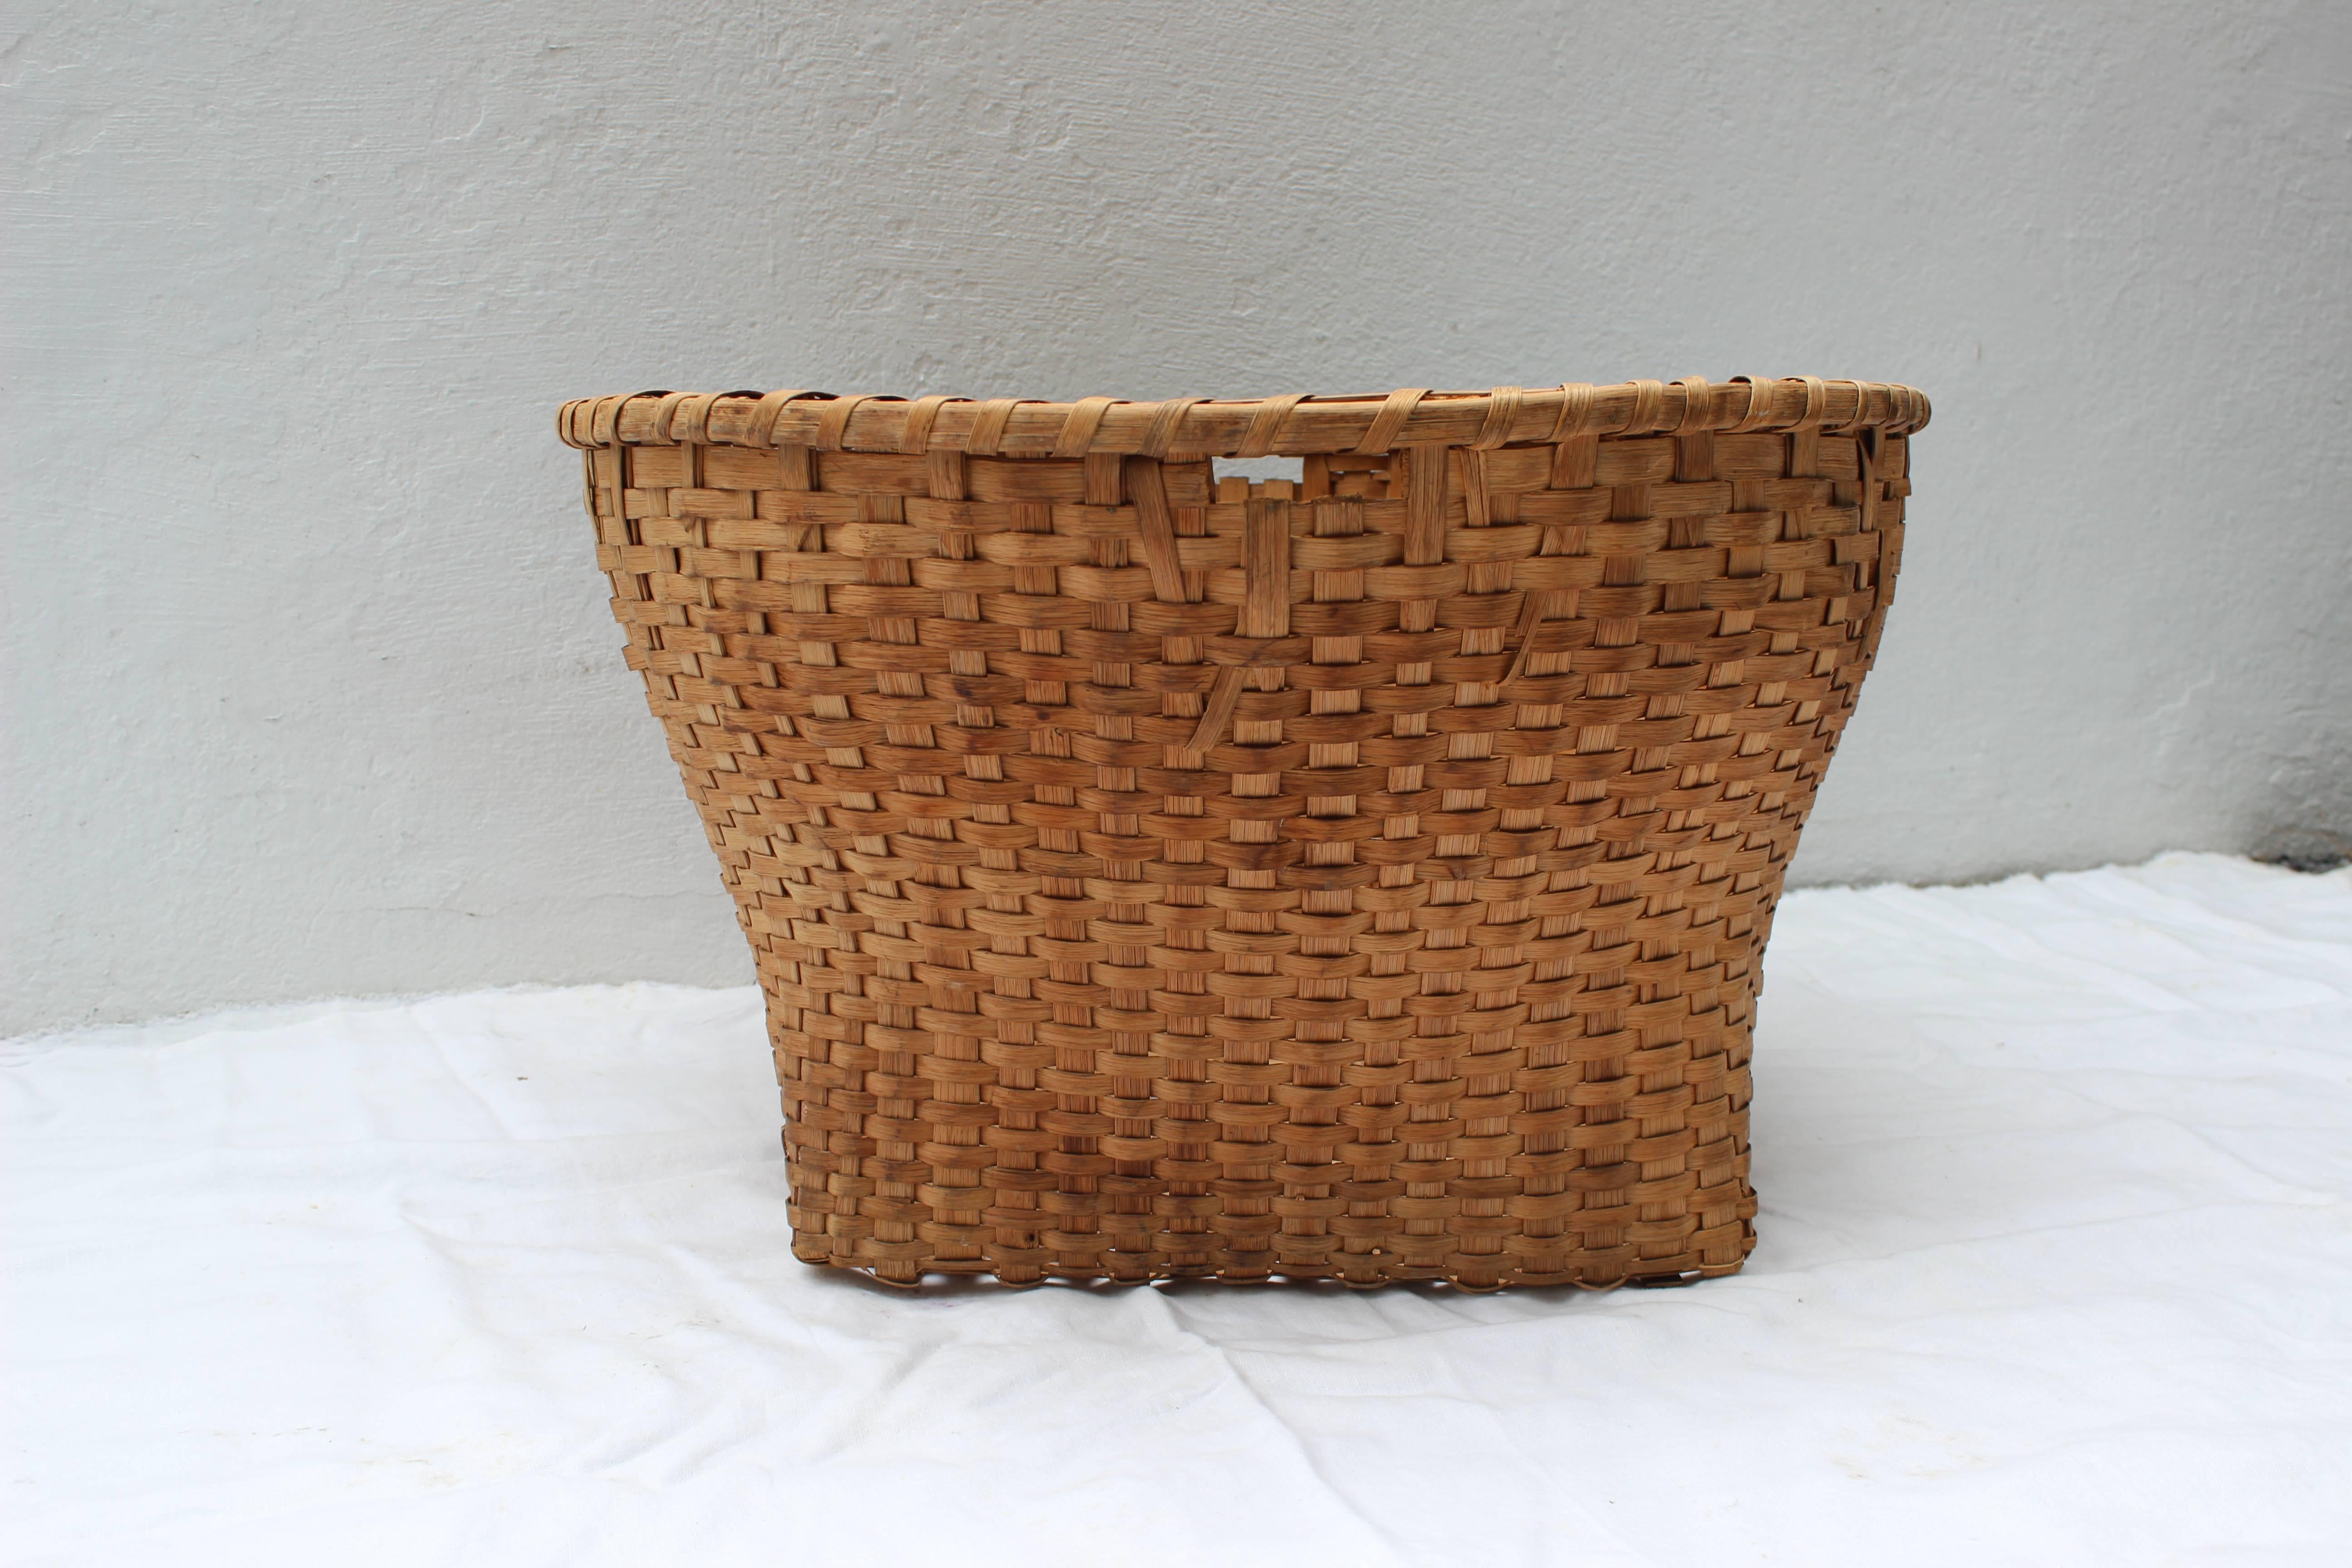 Large 19th century basket.